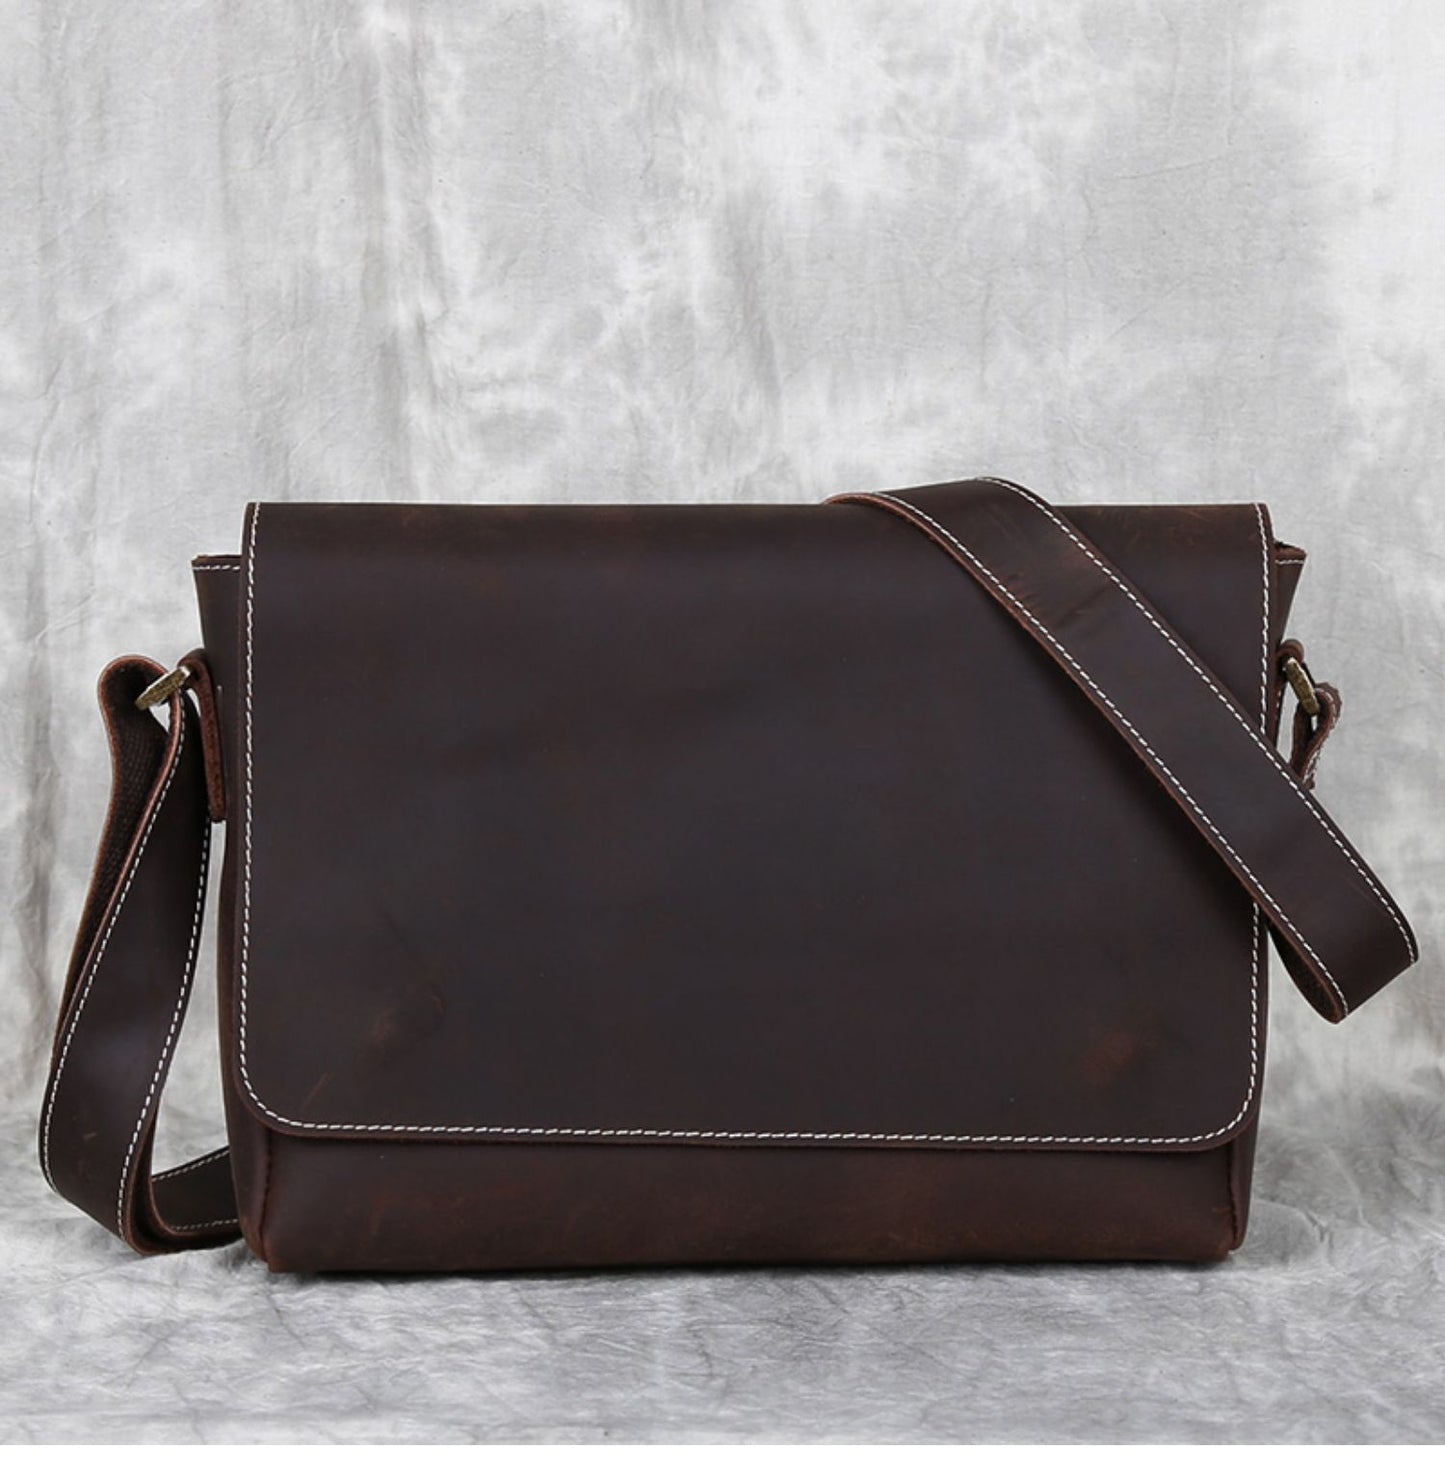 Vintage Genuine Leather Messenger Sling Bag | Men & Women | For Business, School, Bookbag, Laptop, Travel, Daypack, Hiking, Work